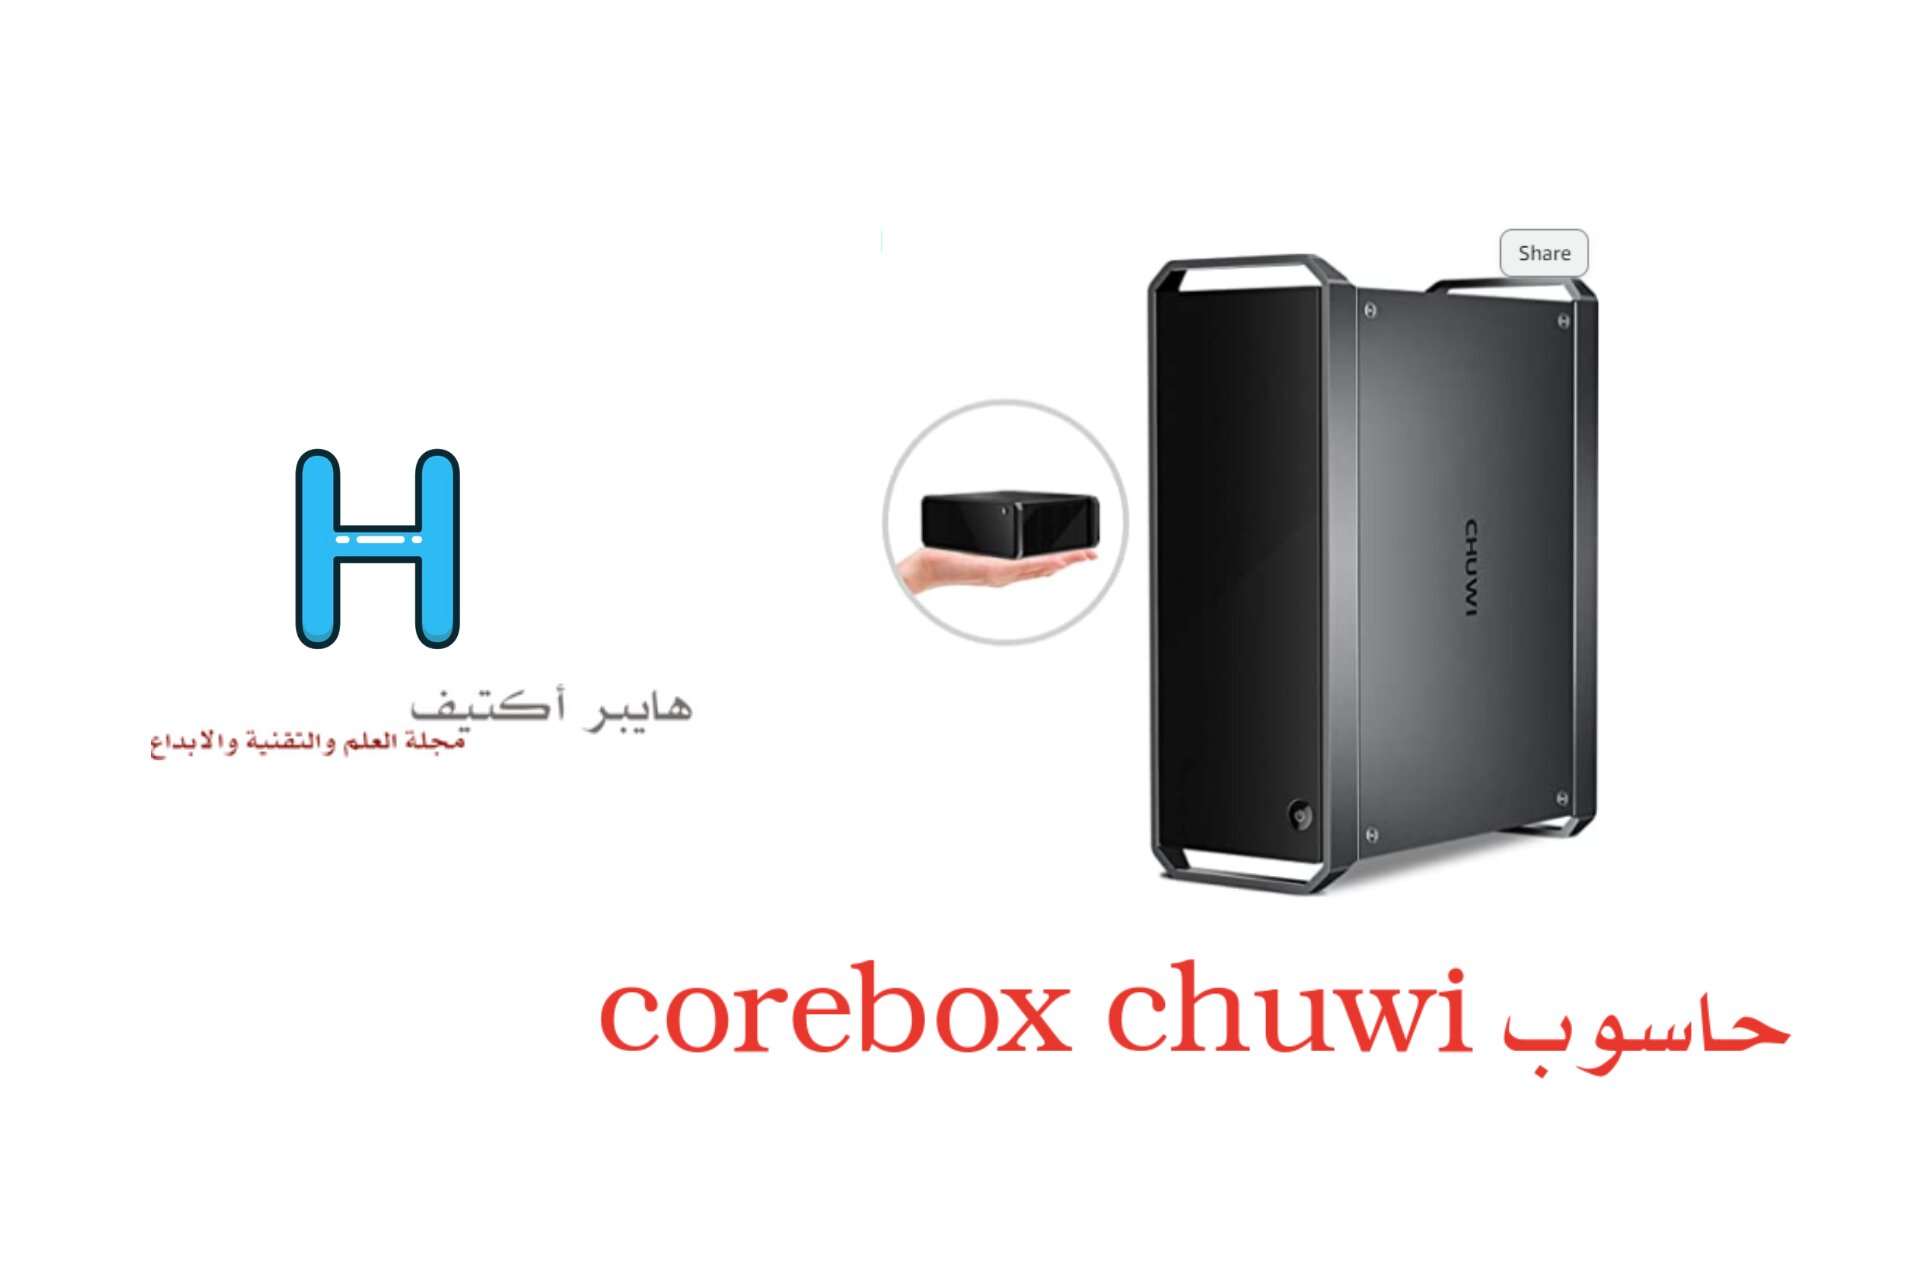 corebox chuwi